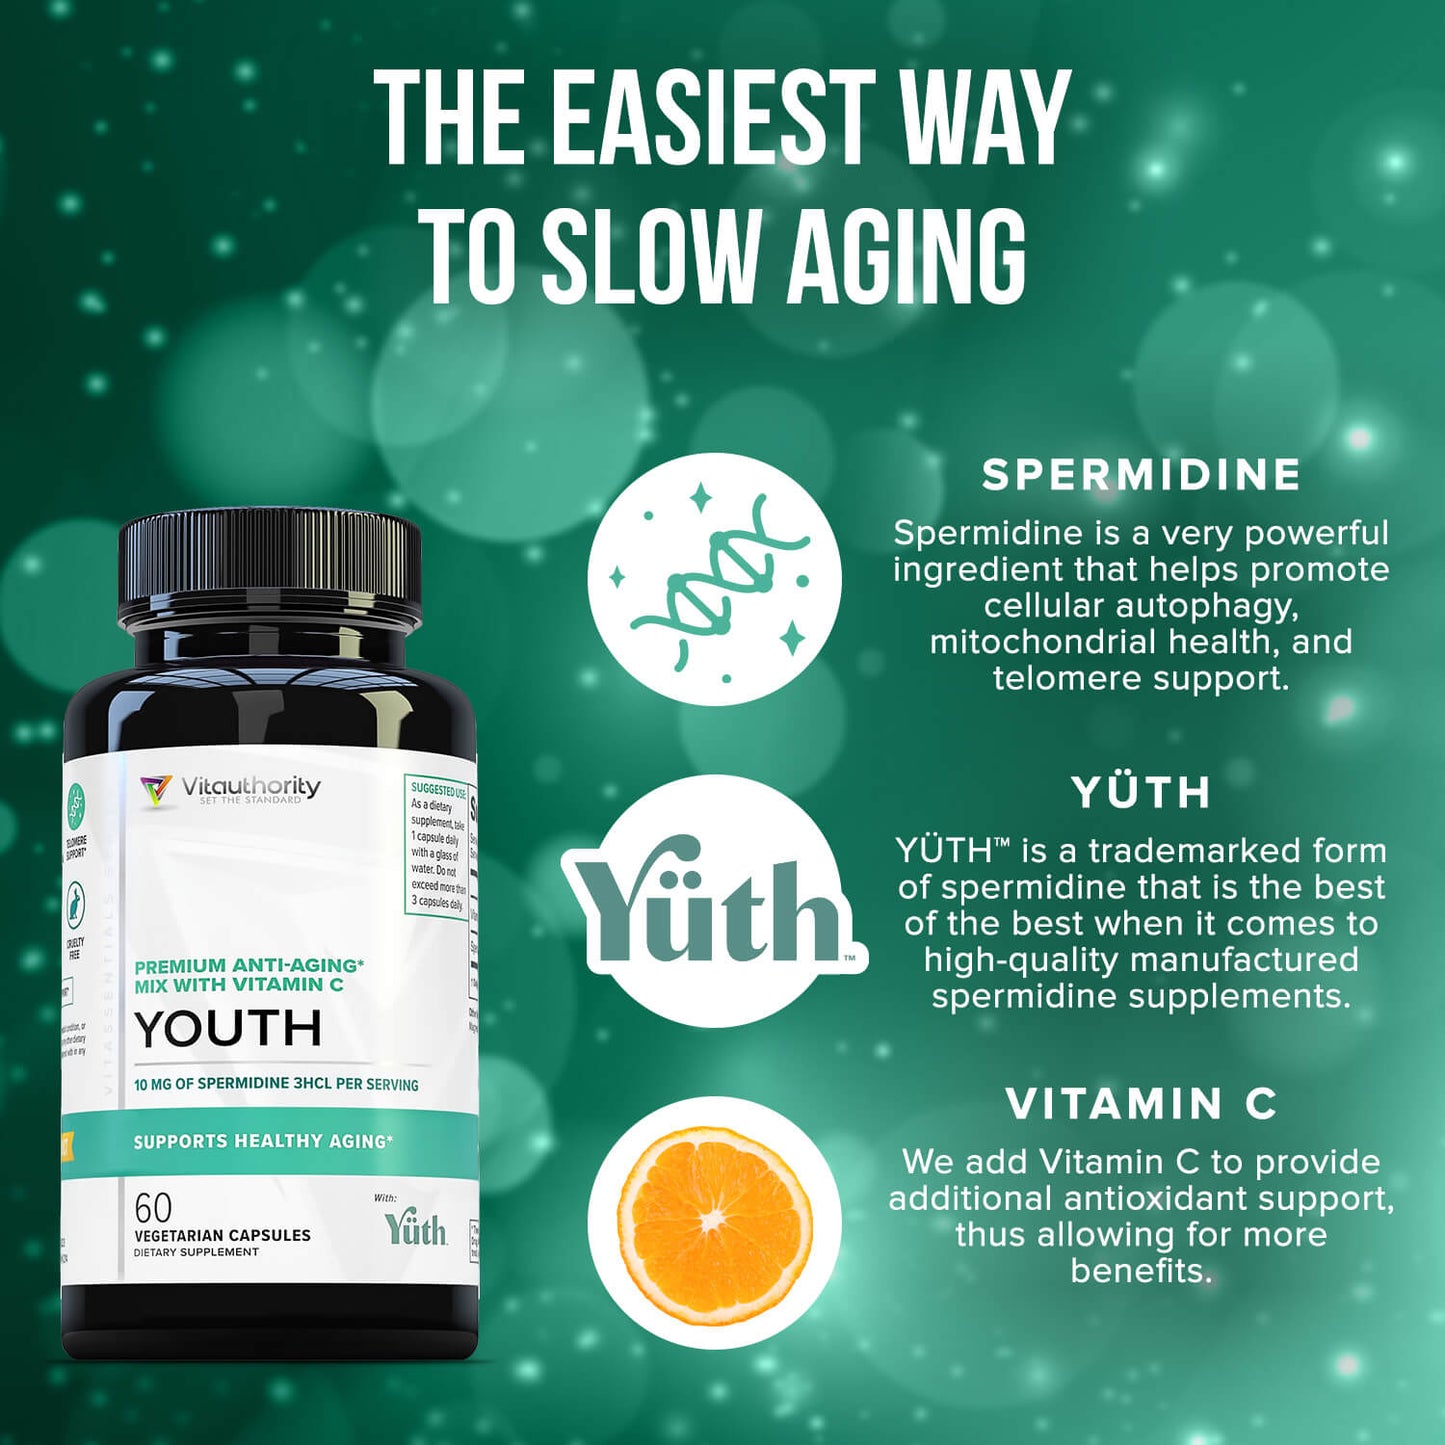 Youth Premium Anti-Aging Mix